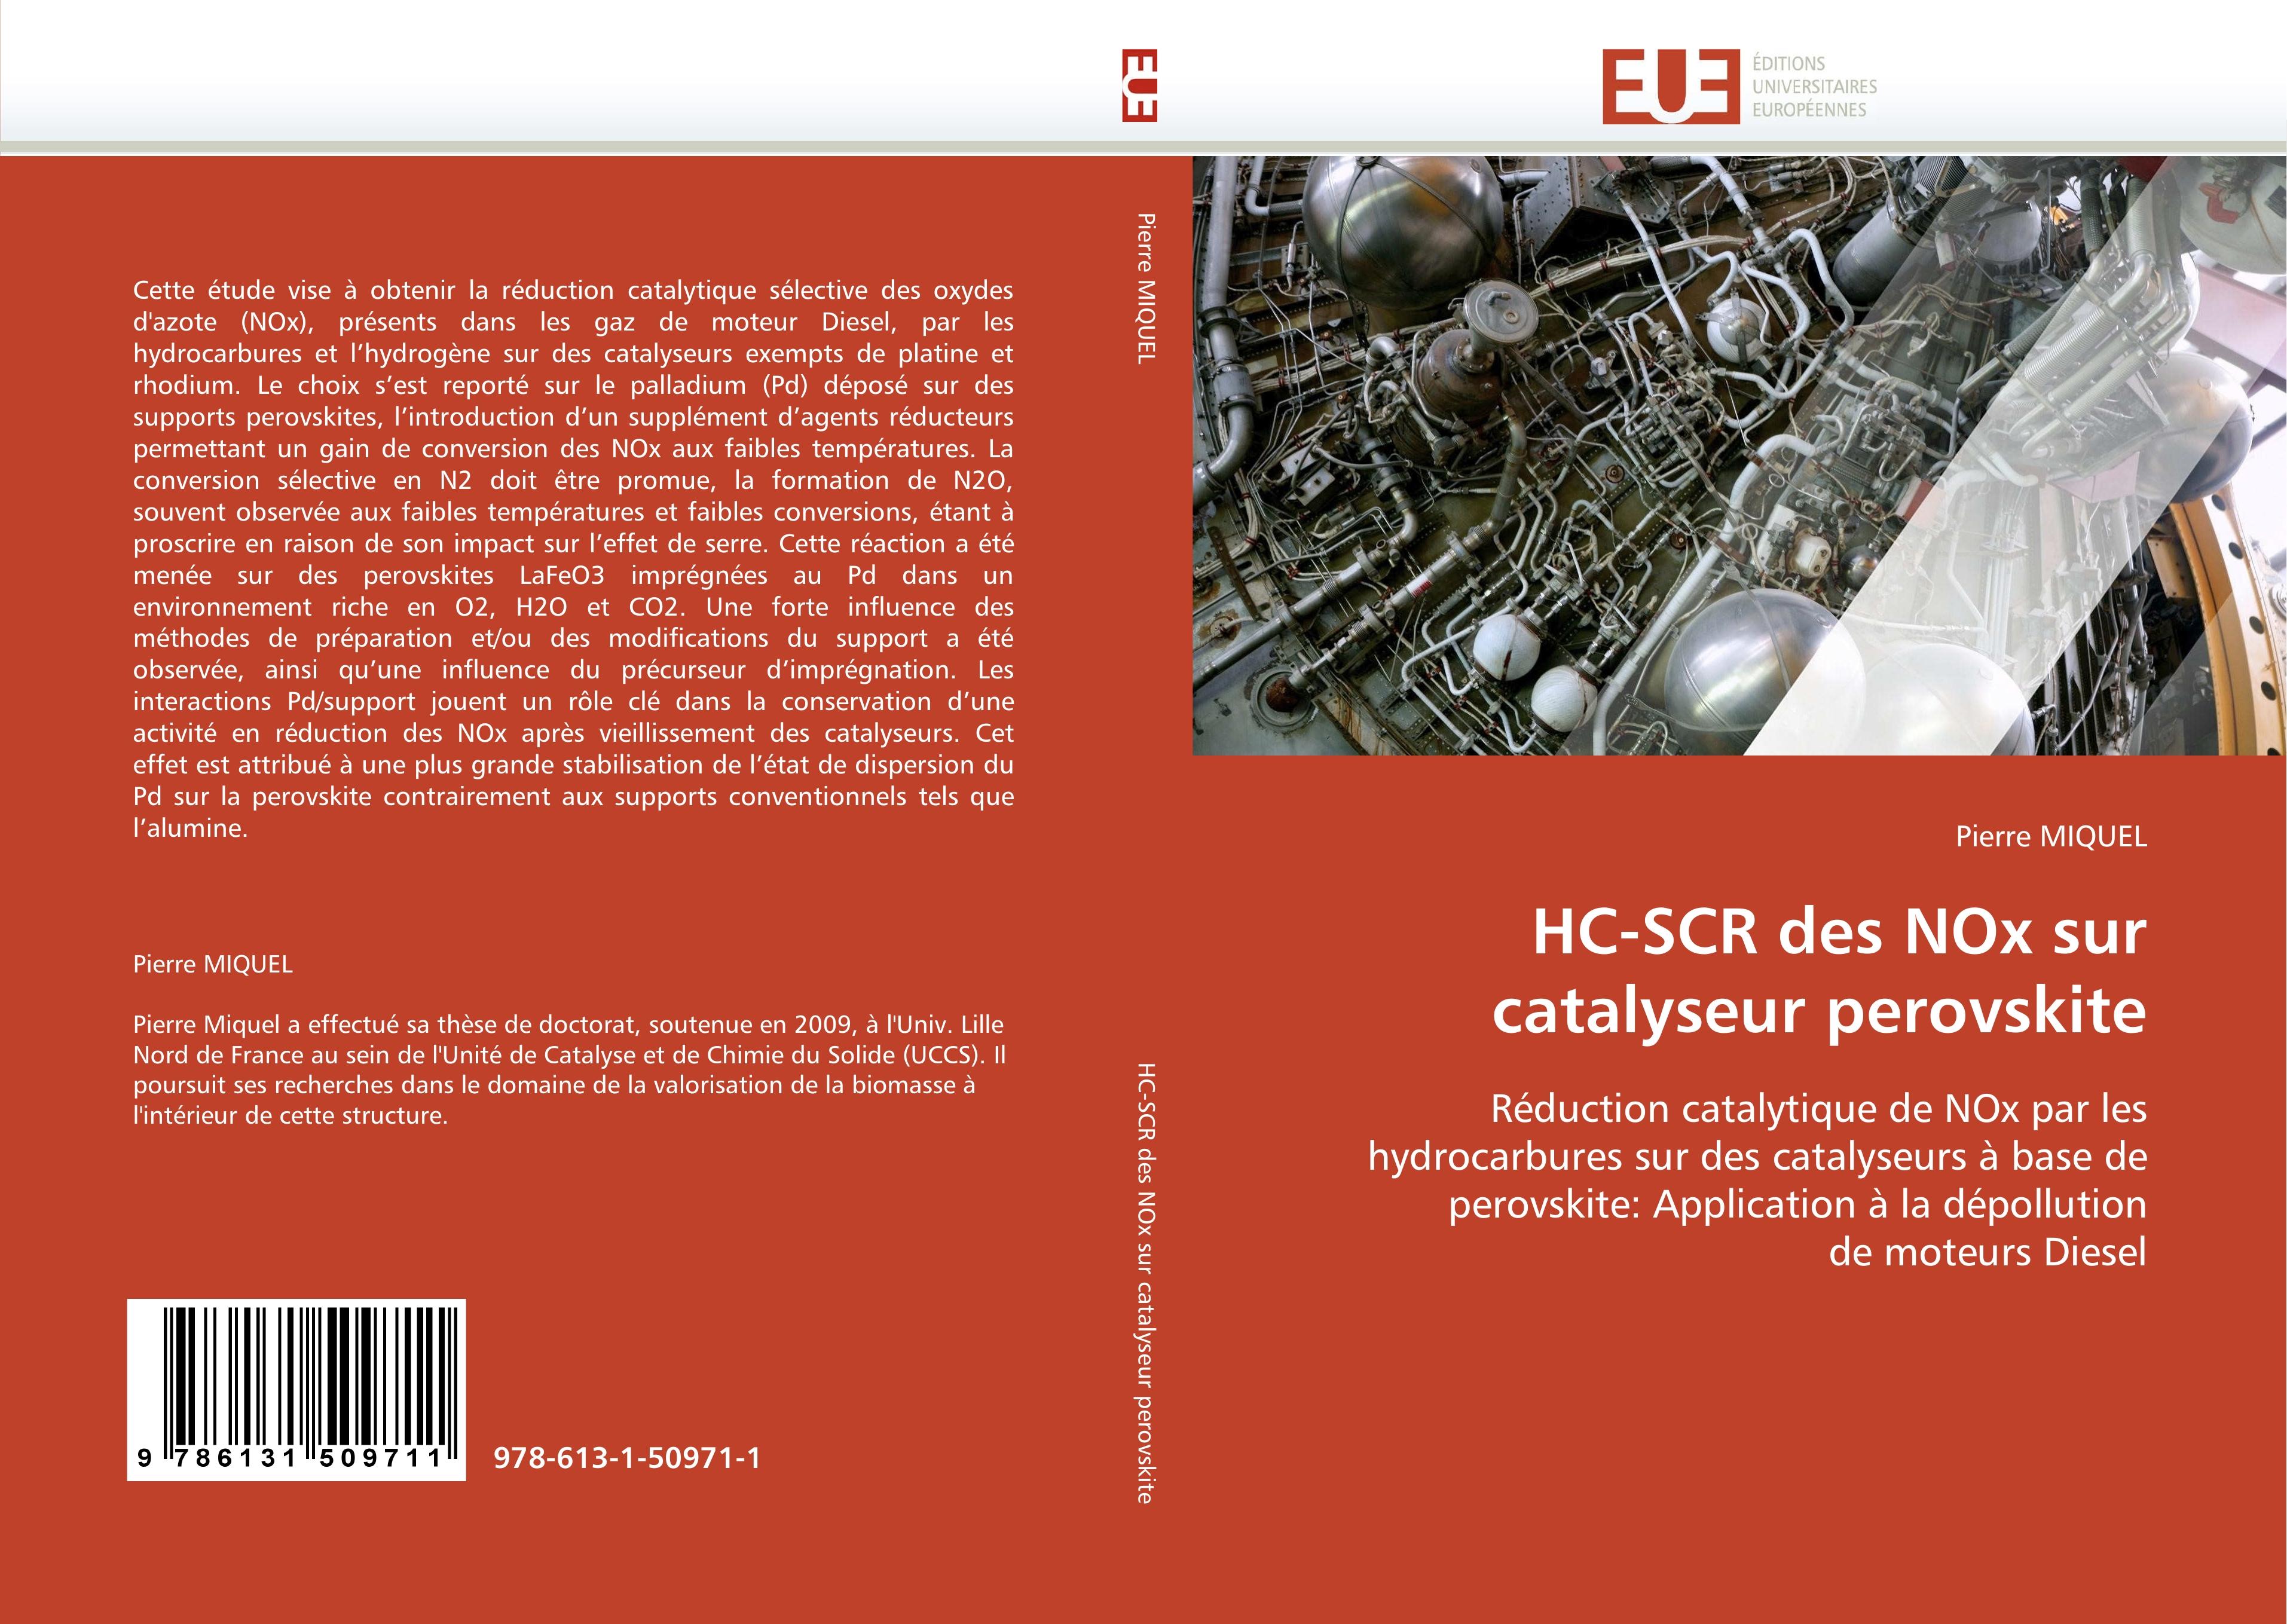 HC-SCR des NOx sur catalyseur perovskite - Pierre MIQUEL